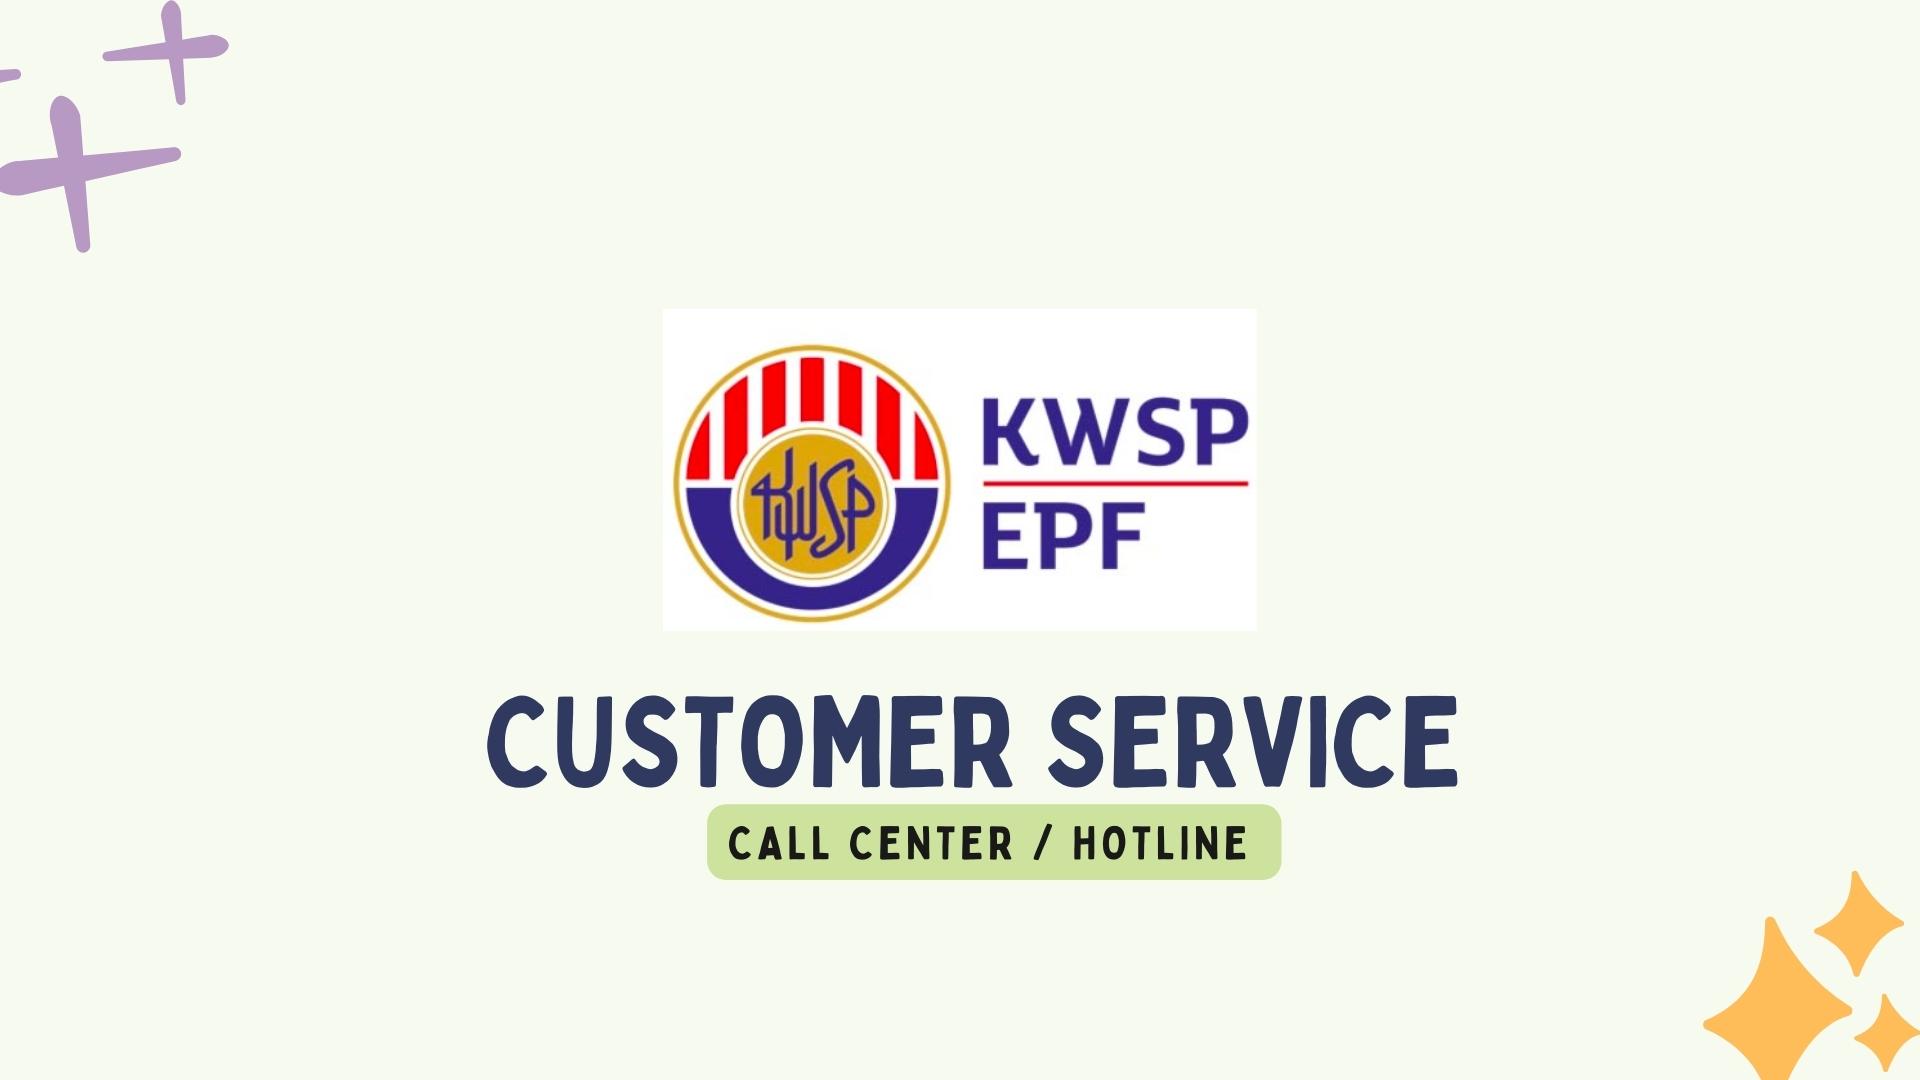 EPF KWSP Customer Service